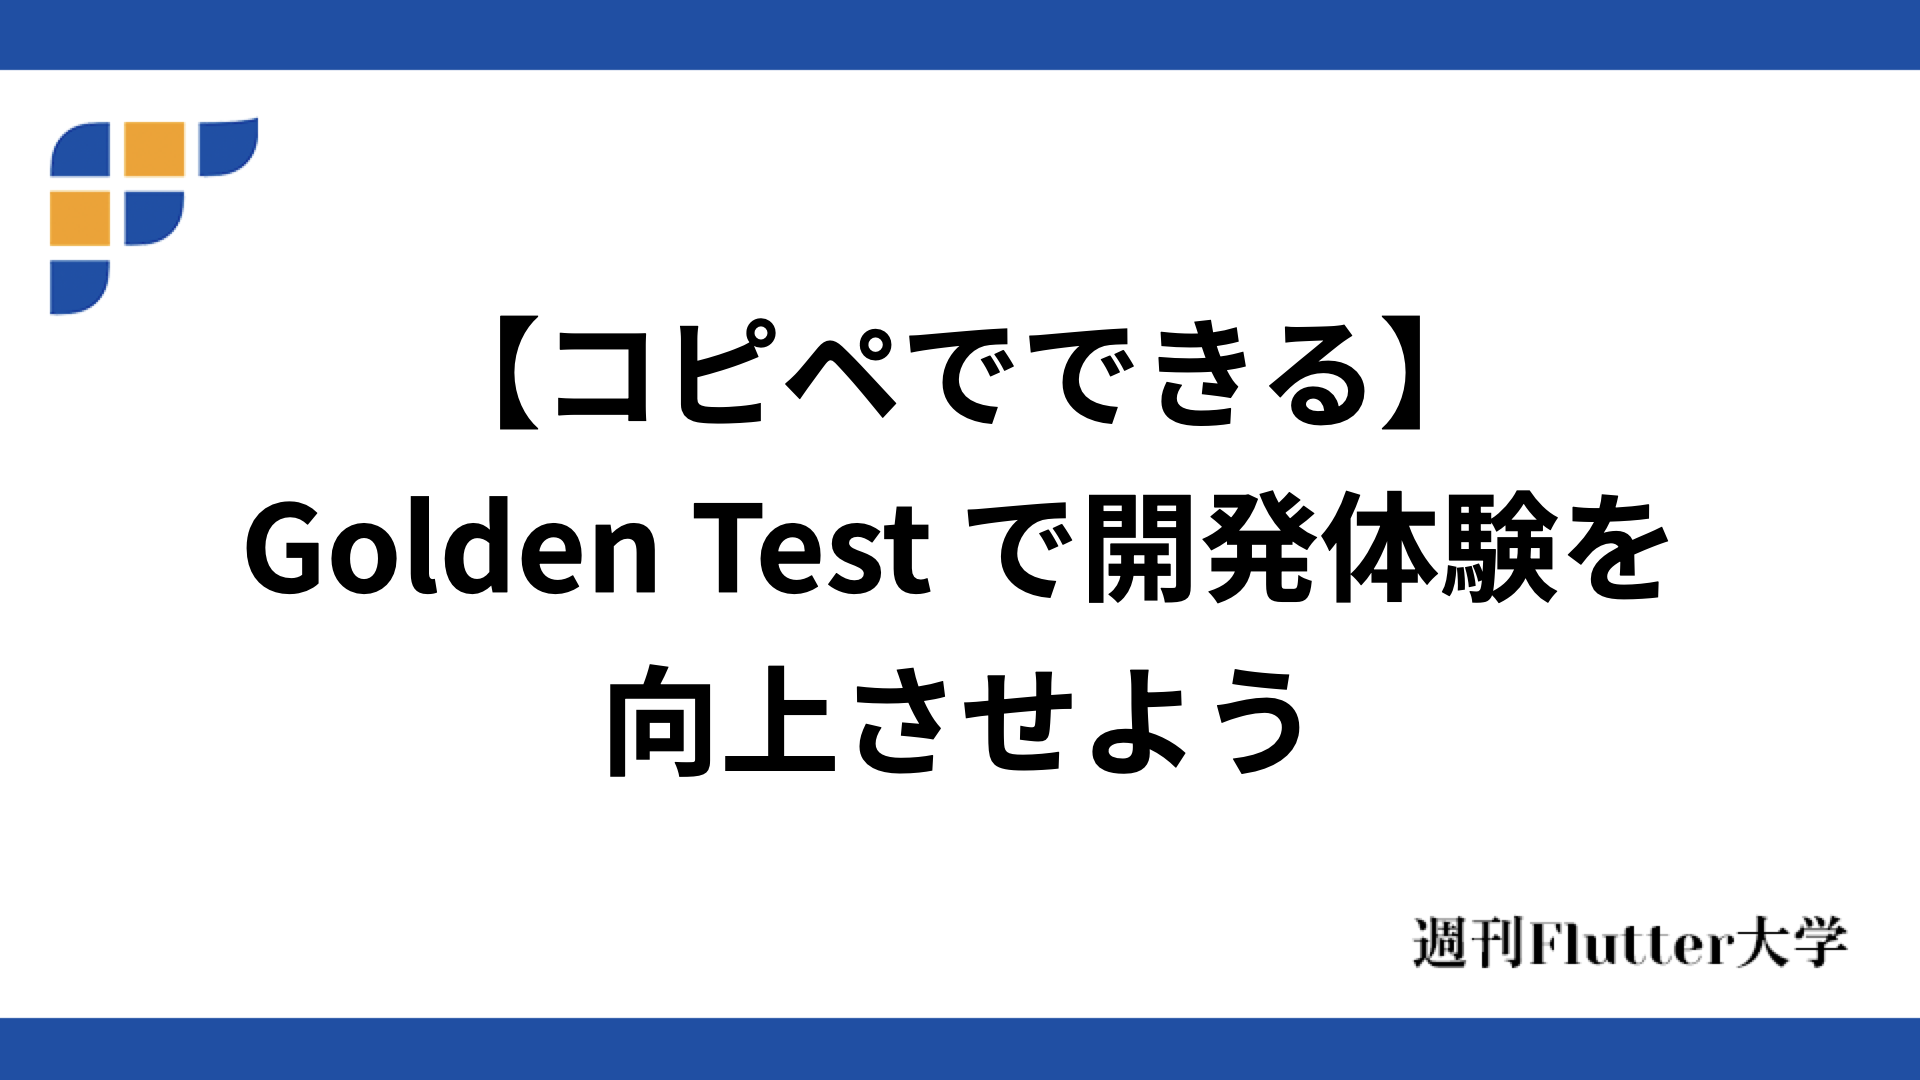 Golden Test